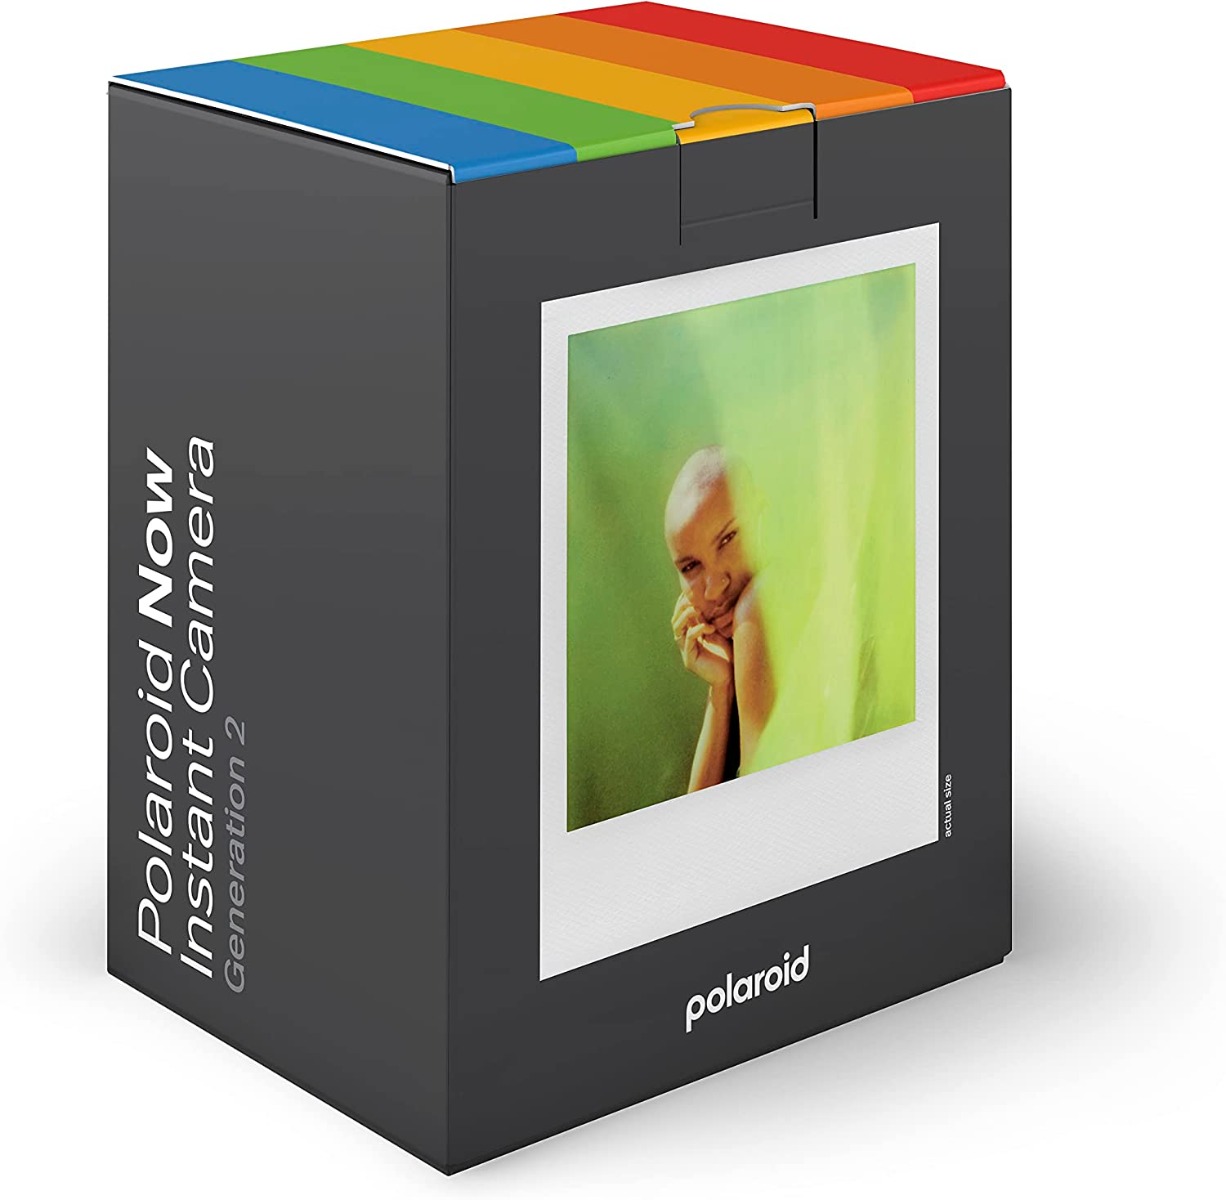 Polaroid Now Gen 2 Instant Μηχανή (Black) | Πρόδρομος Γαλαίος - Φωτογραφικά  Είδη